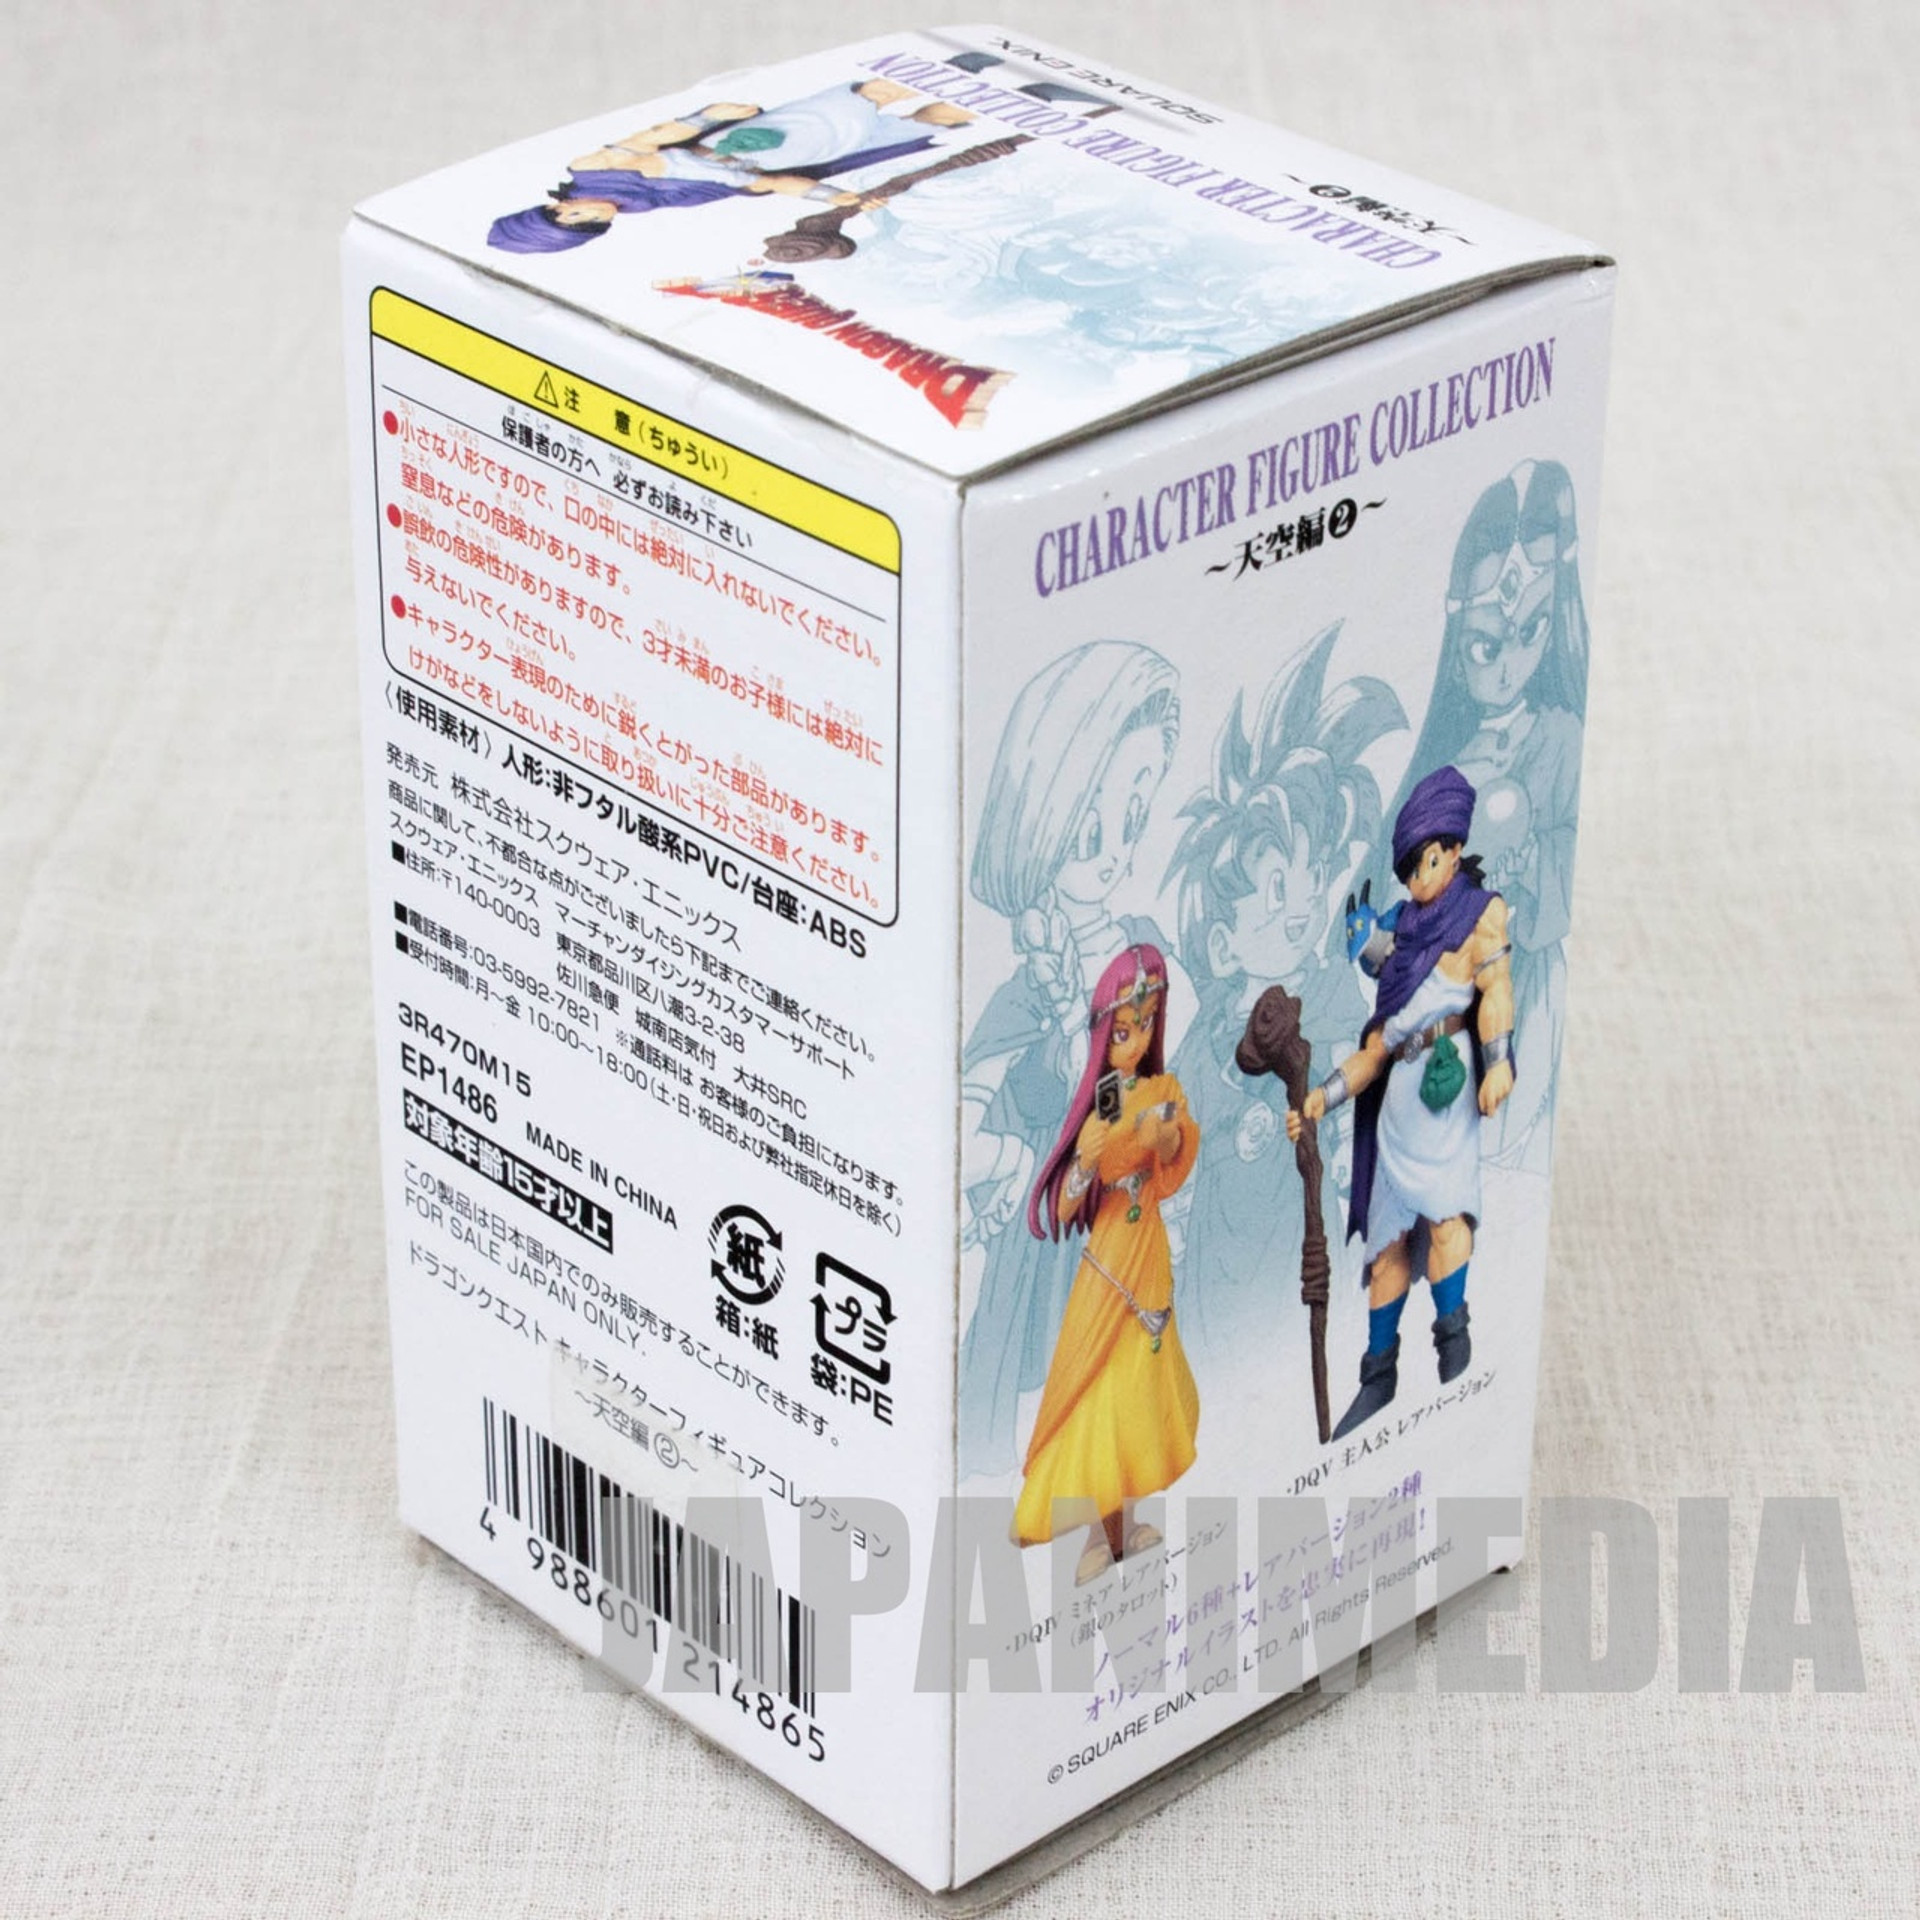 Dragon Quest Hero Character Figure Collection Vol2 Square Enix Japan